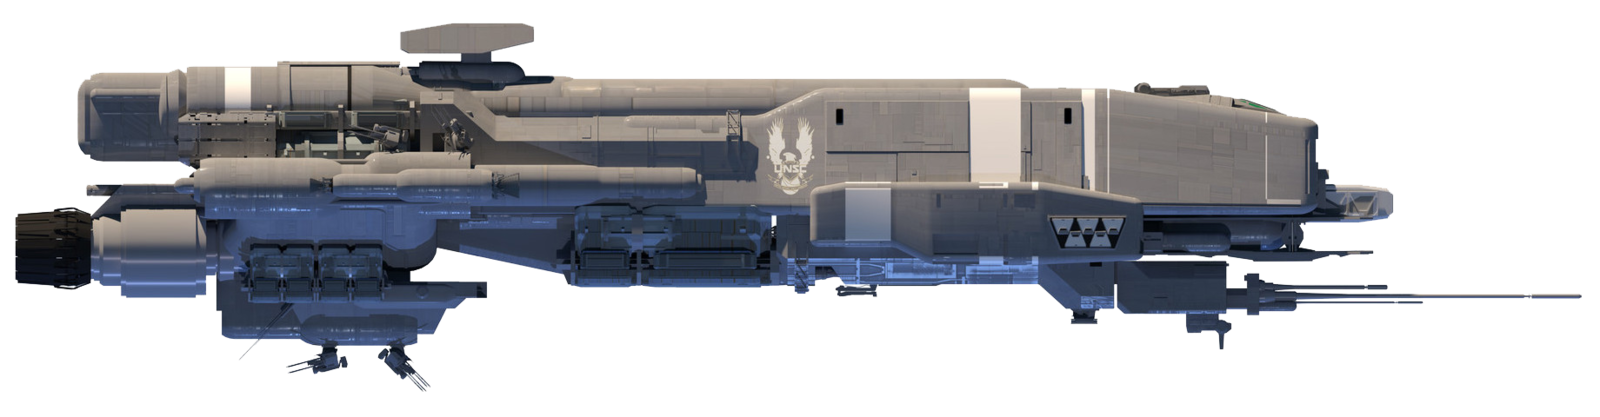 【HALO舰船百科】罗马短剑级重型巡防舰 —— 侦测并防卫-第4张